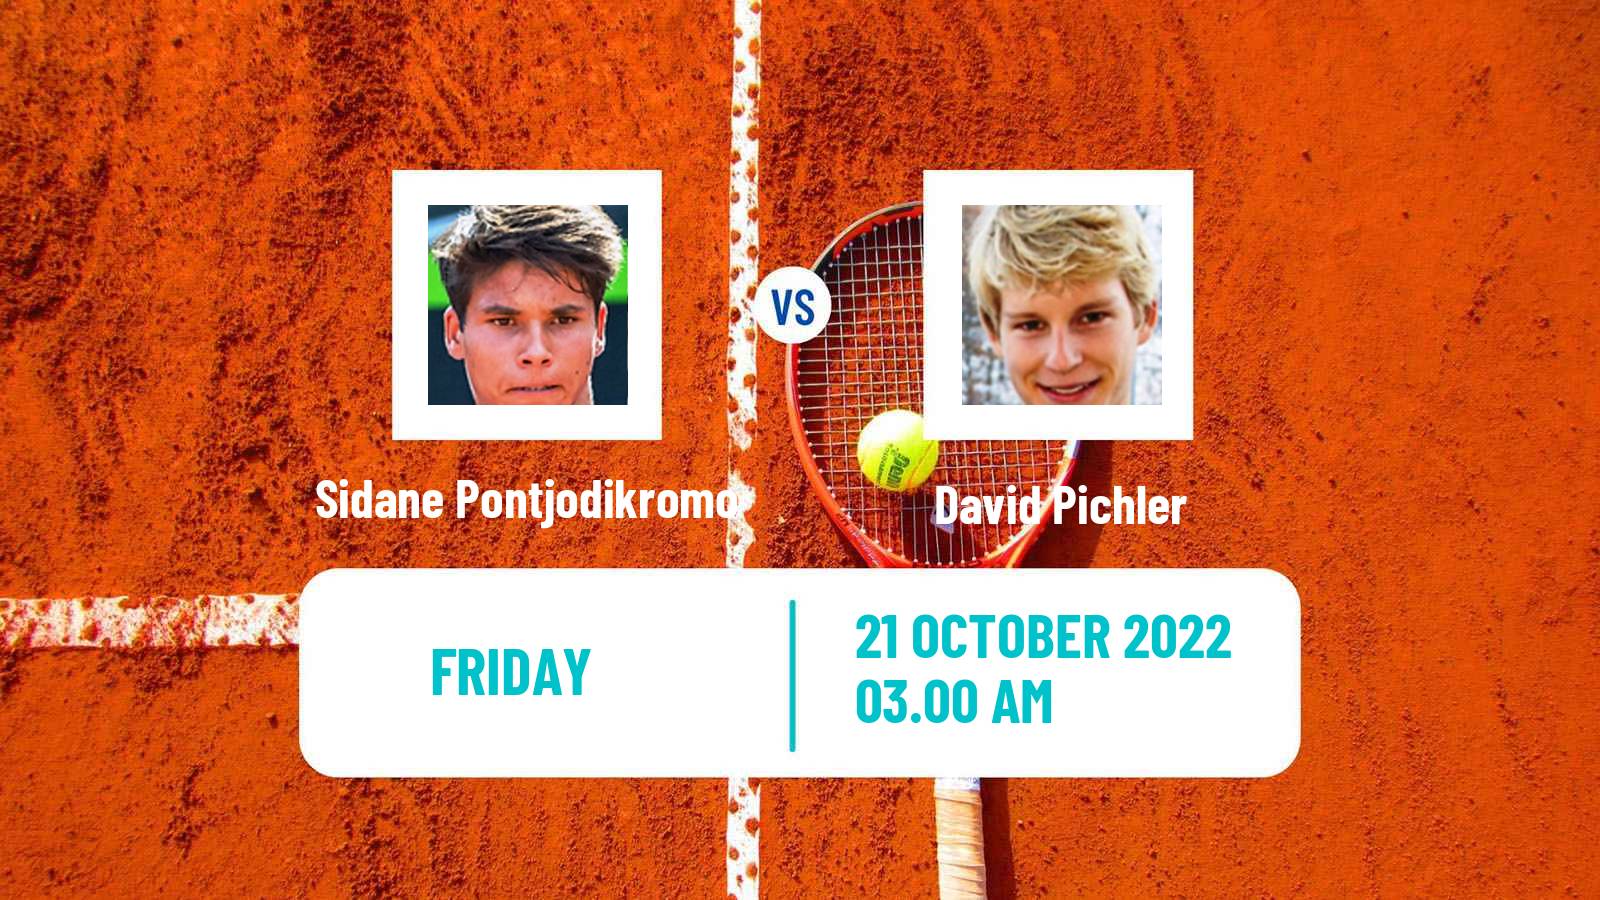 Tennis ITF Tournaments Sidane Pontjodikromo - David Pichler